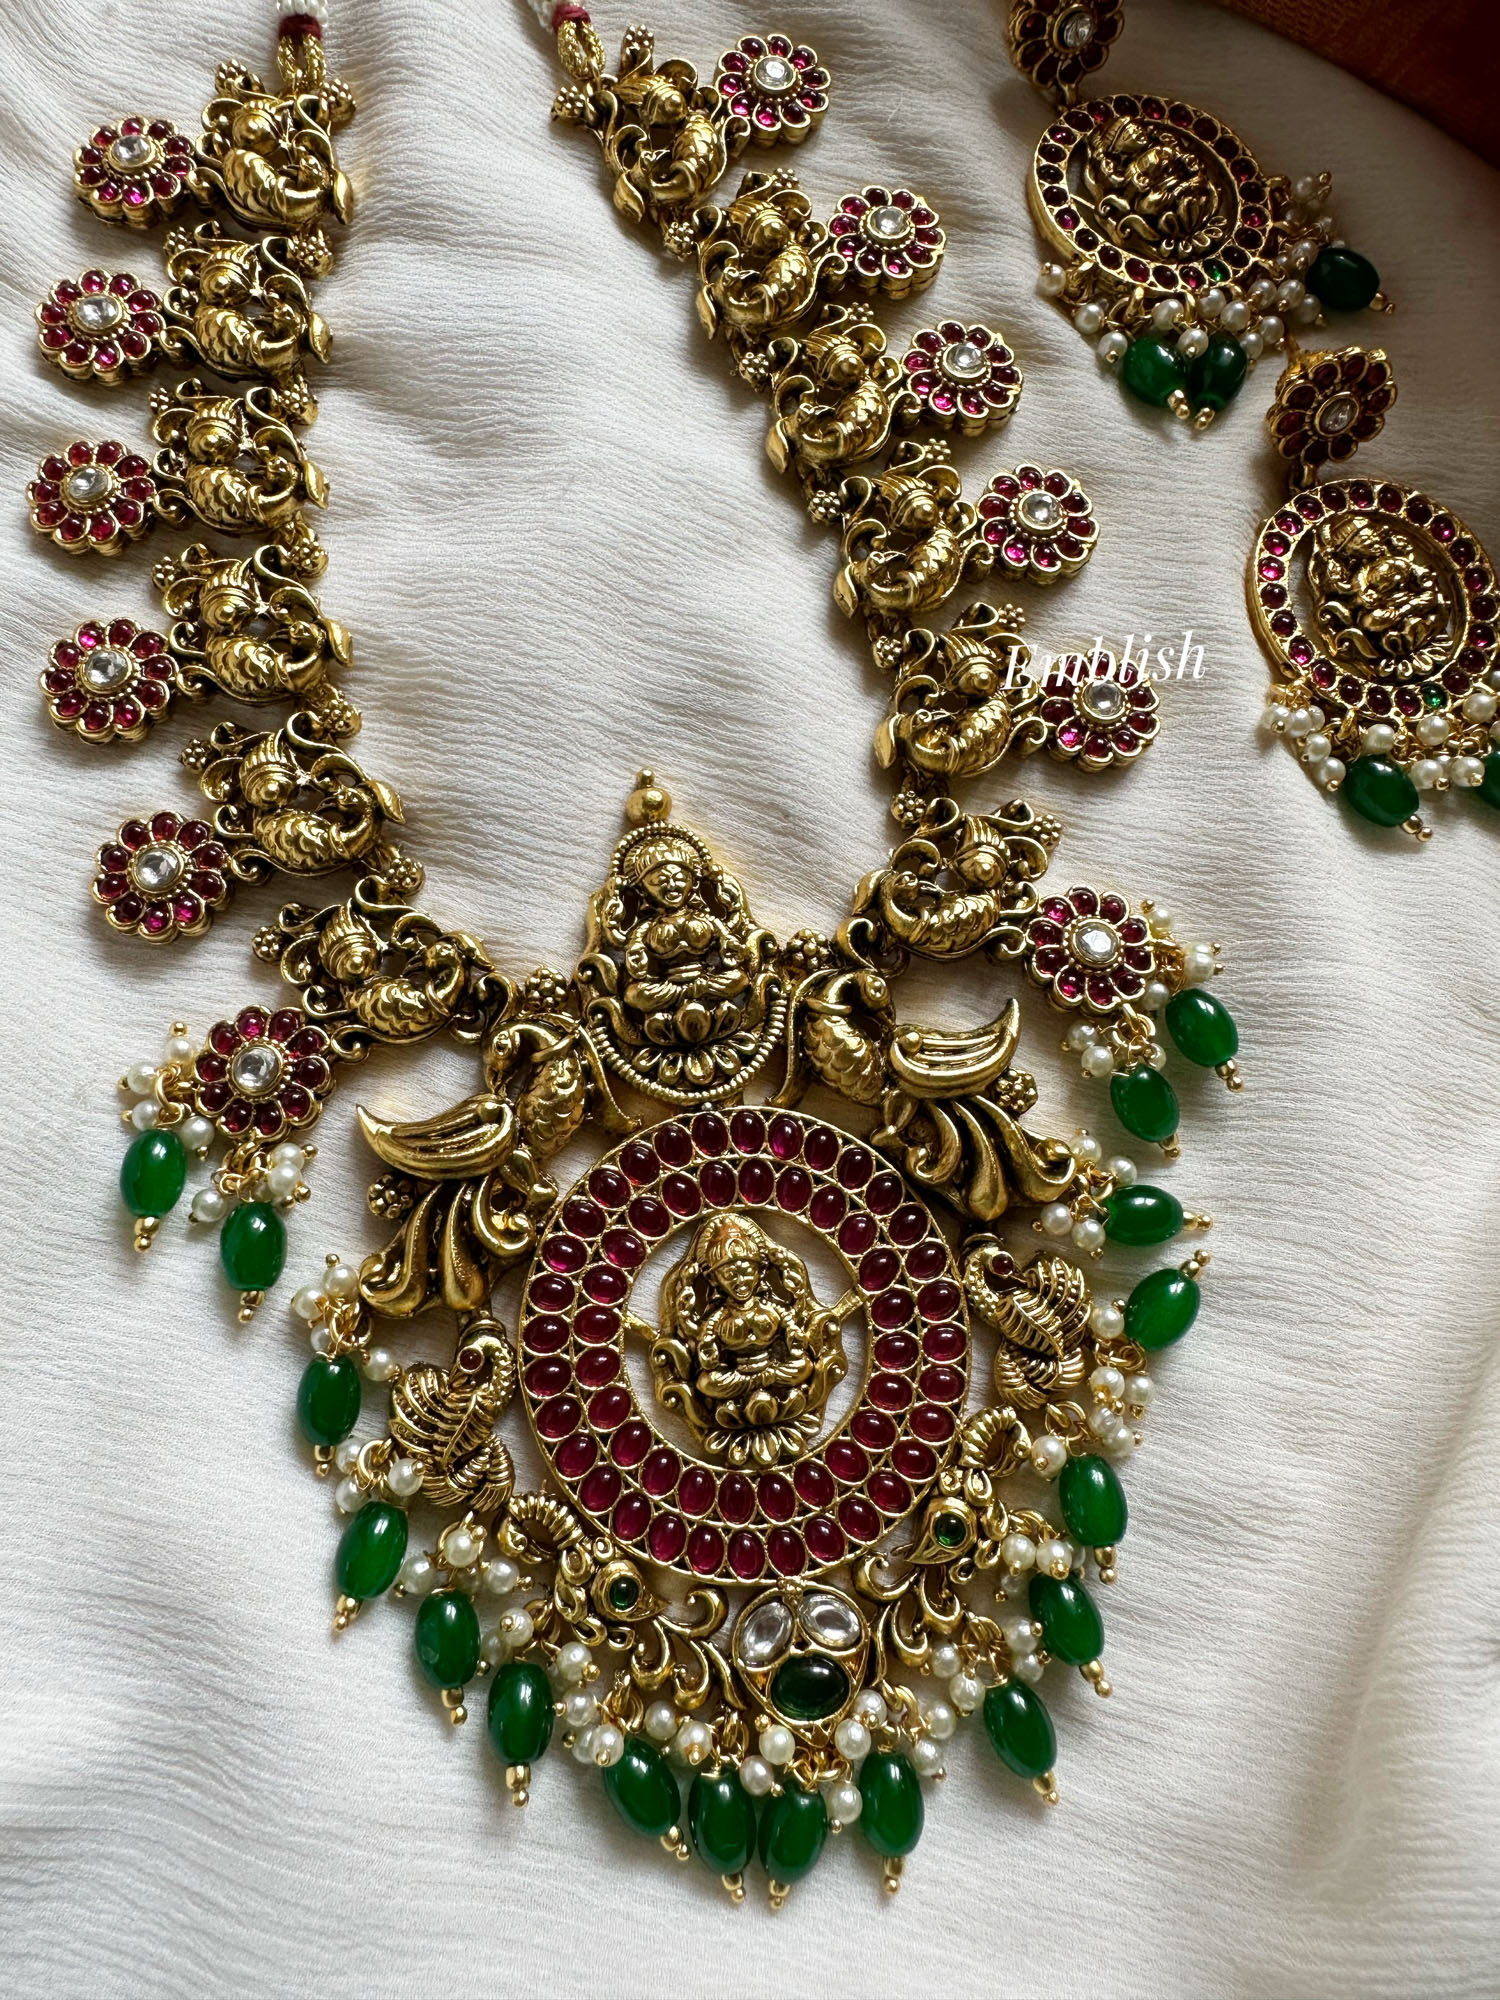 Antique Gold alike Grand Lakshmi with Peacock Short Neckpiece - Green Beads	